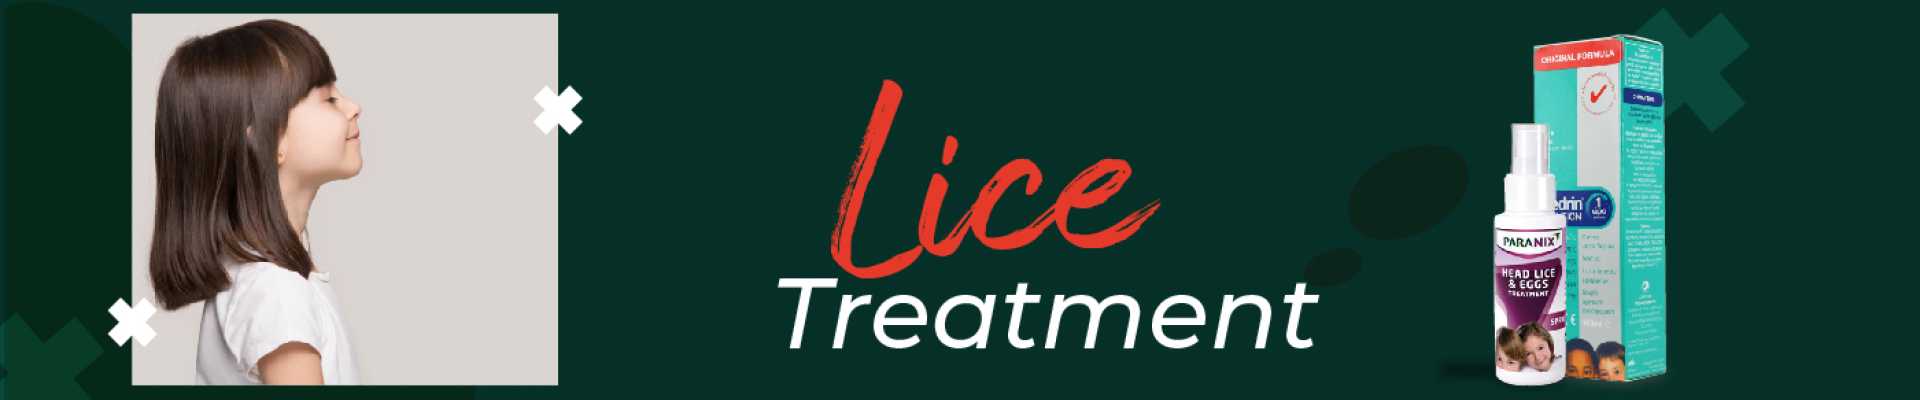 lice treatment slider